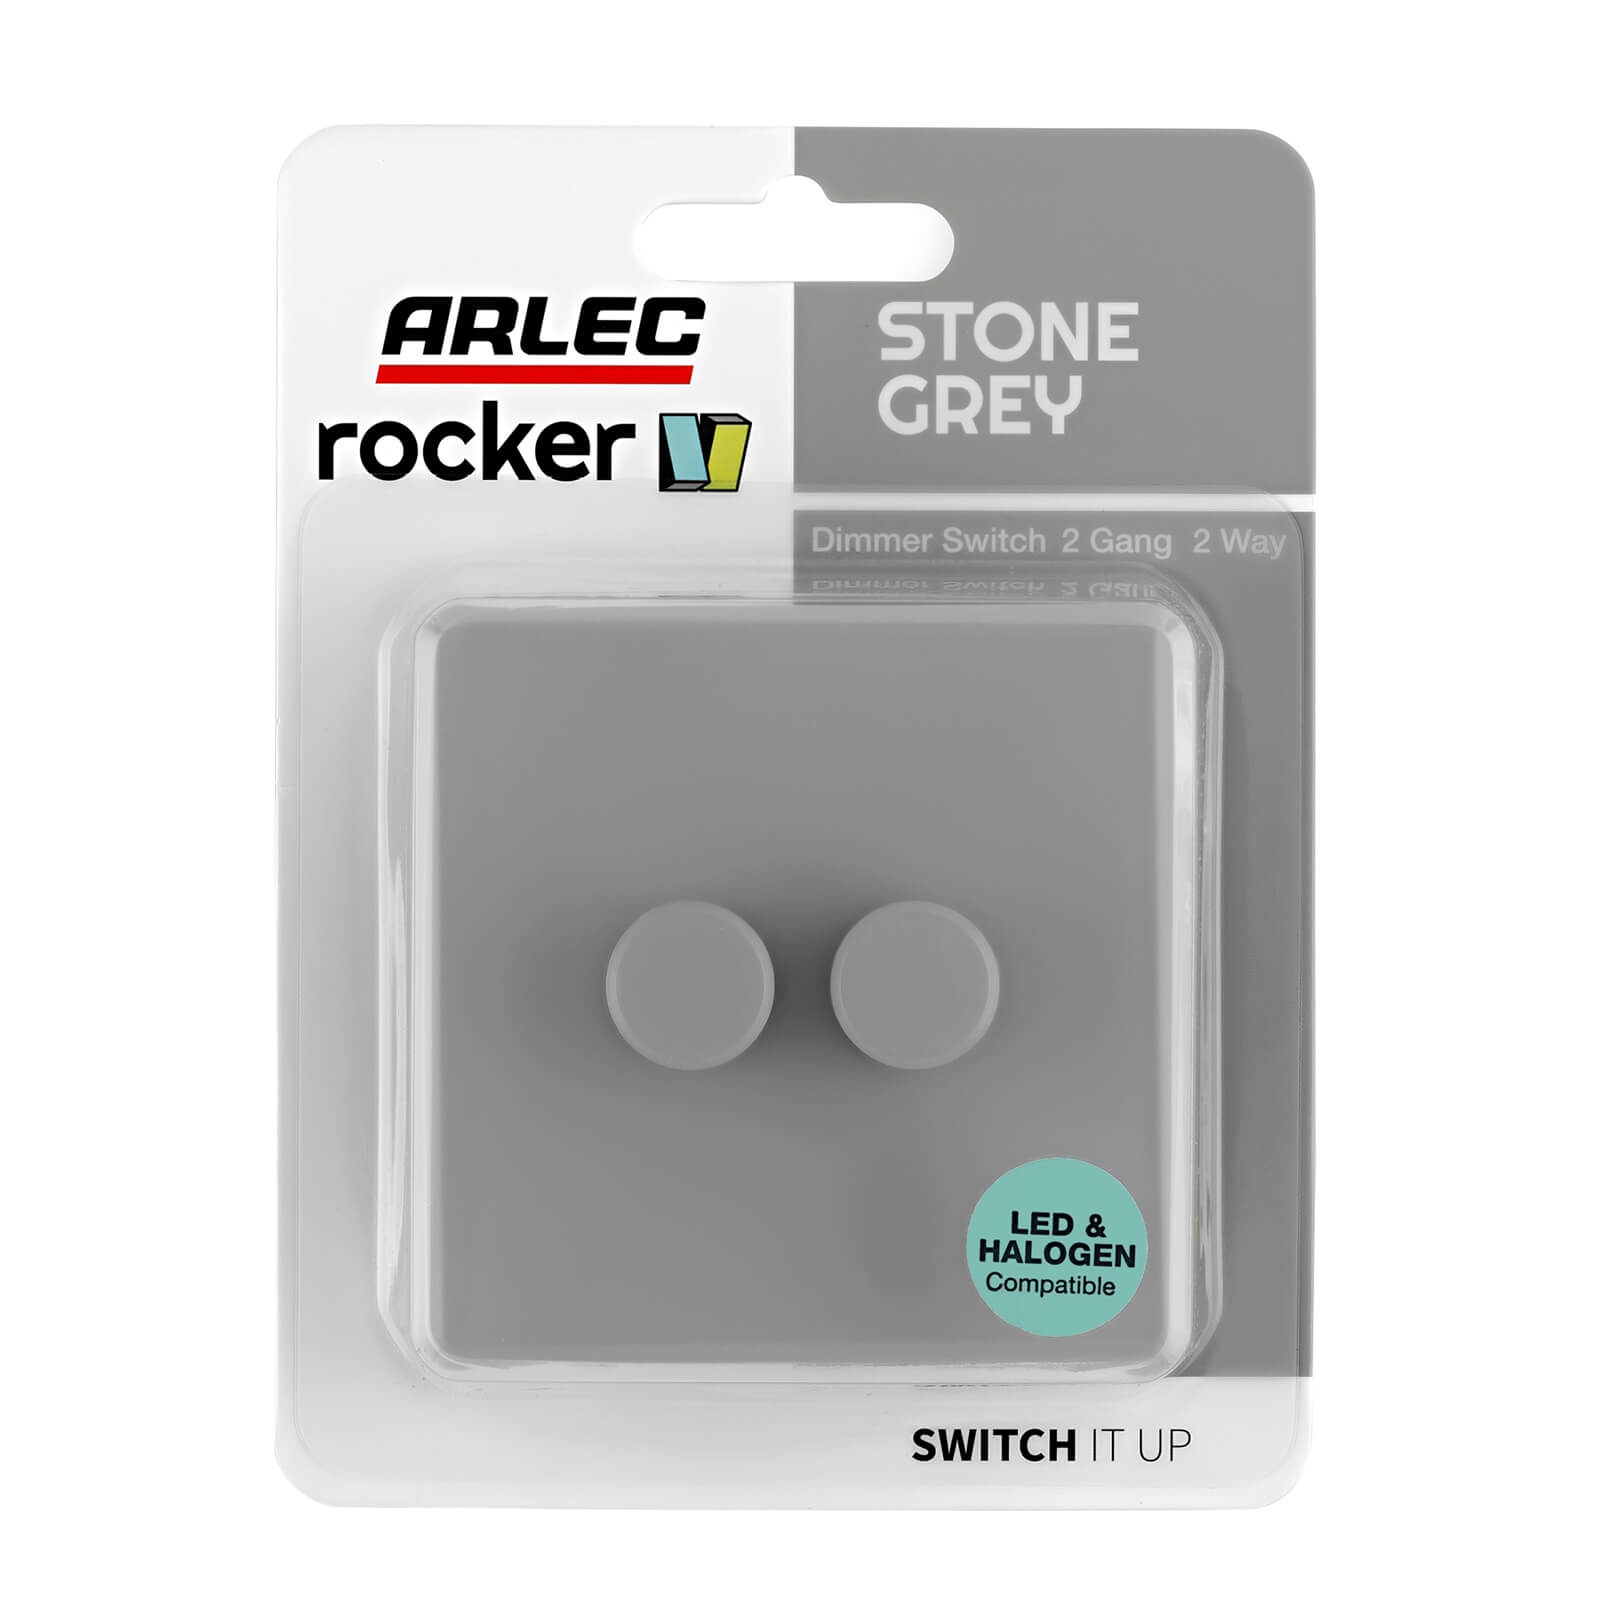 Arlec Rocker 2 Gang 2 Way Stone Grey Dimmer switch